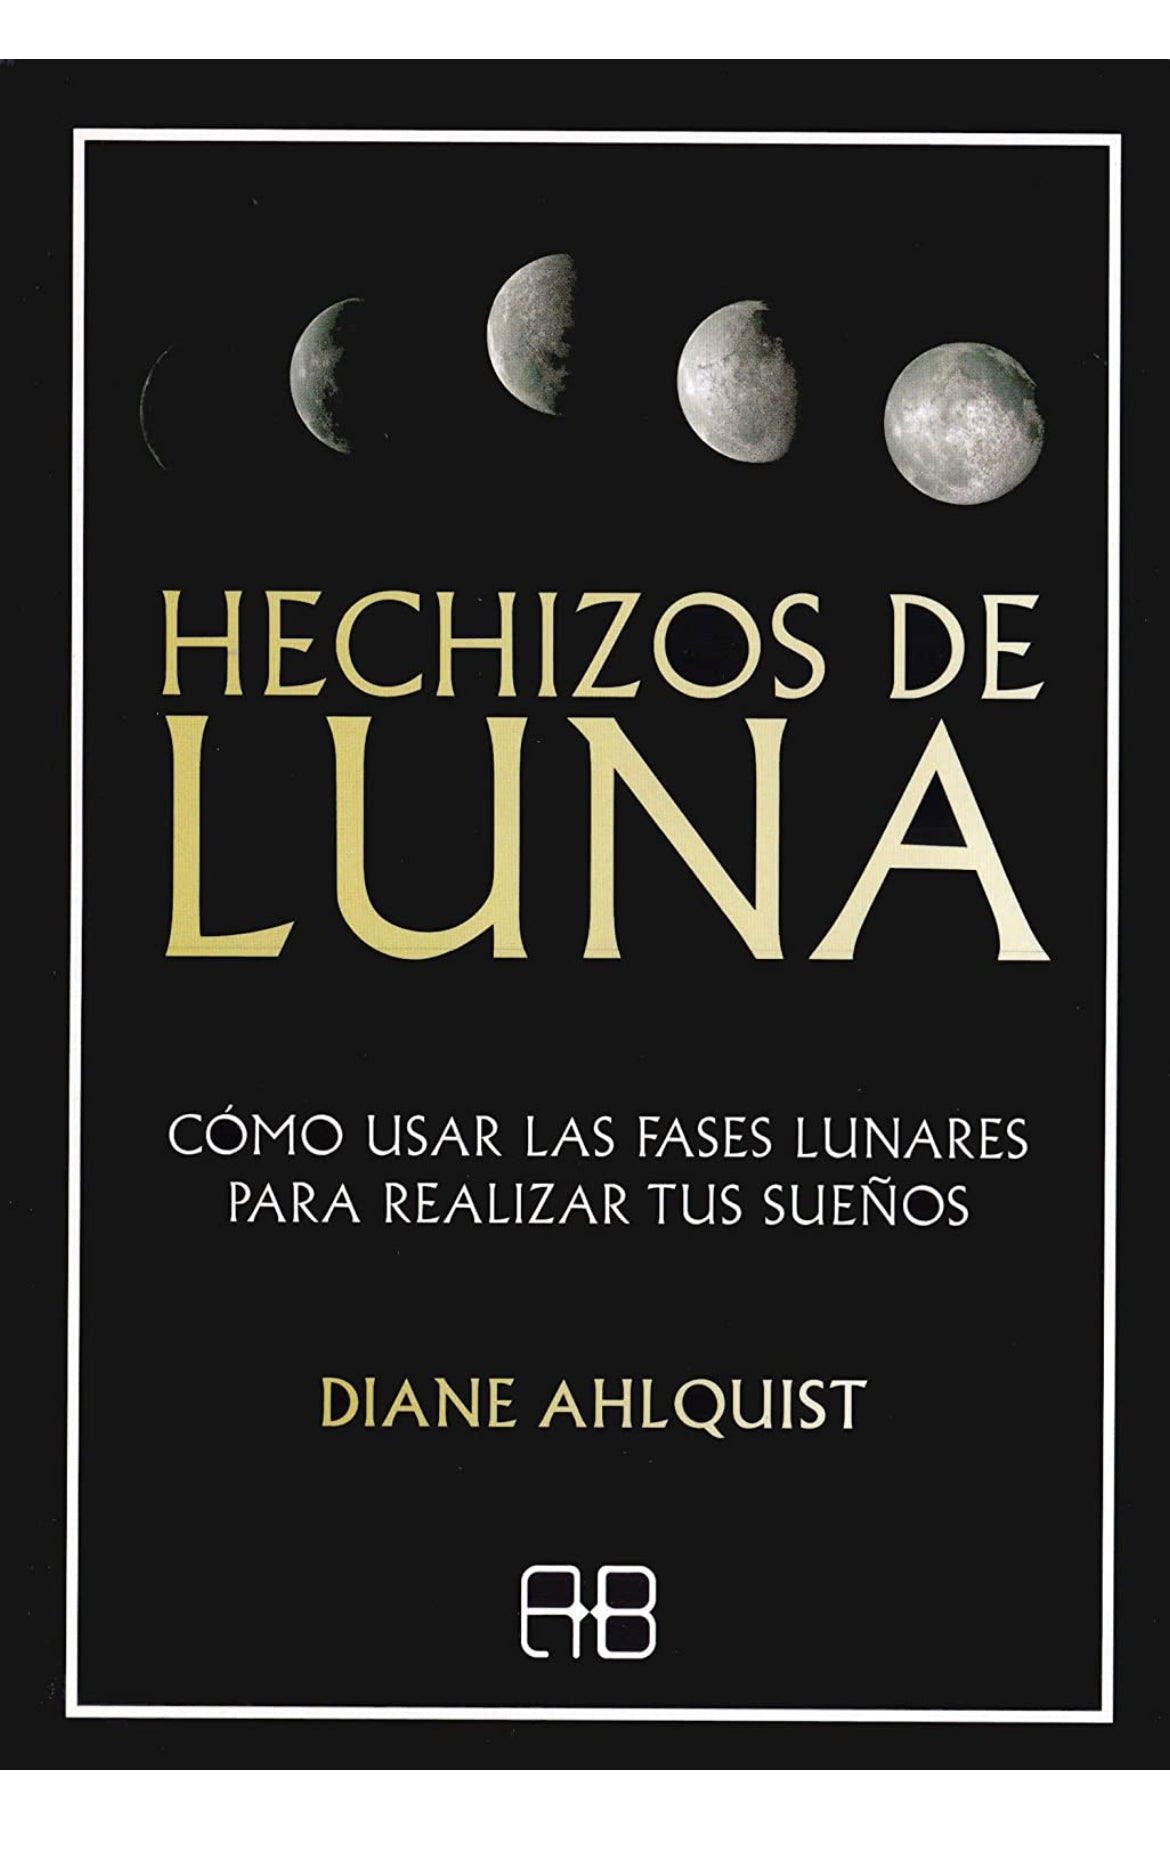 Hechizos de luna - Diane Ahlquist - GreenWitchArt